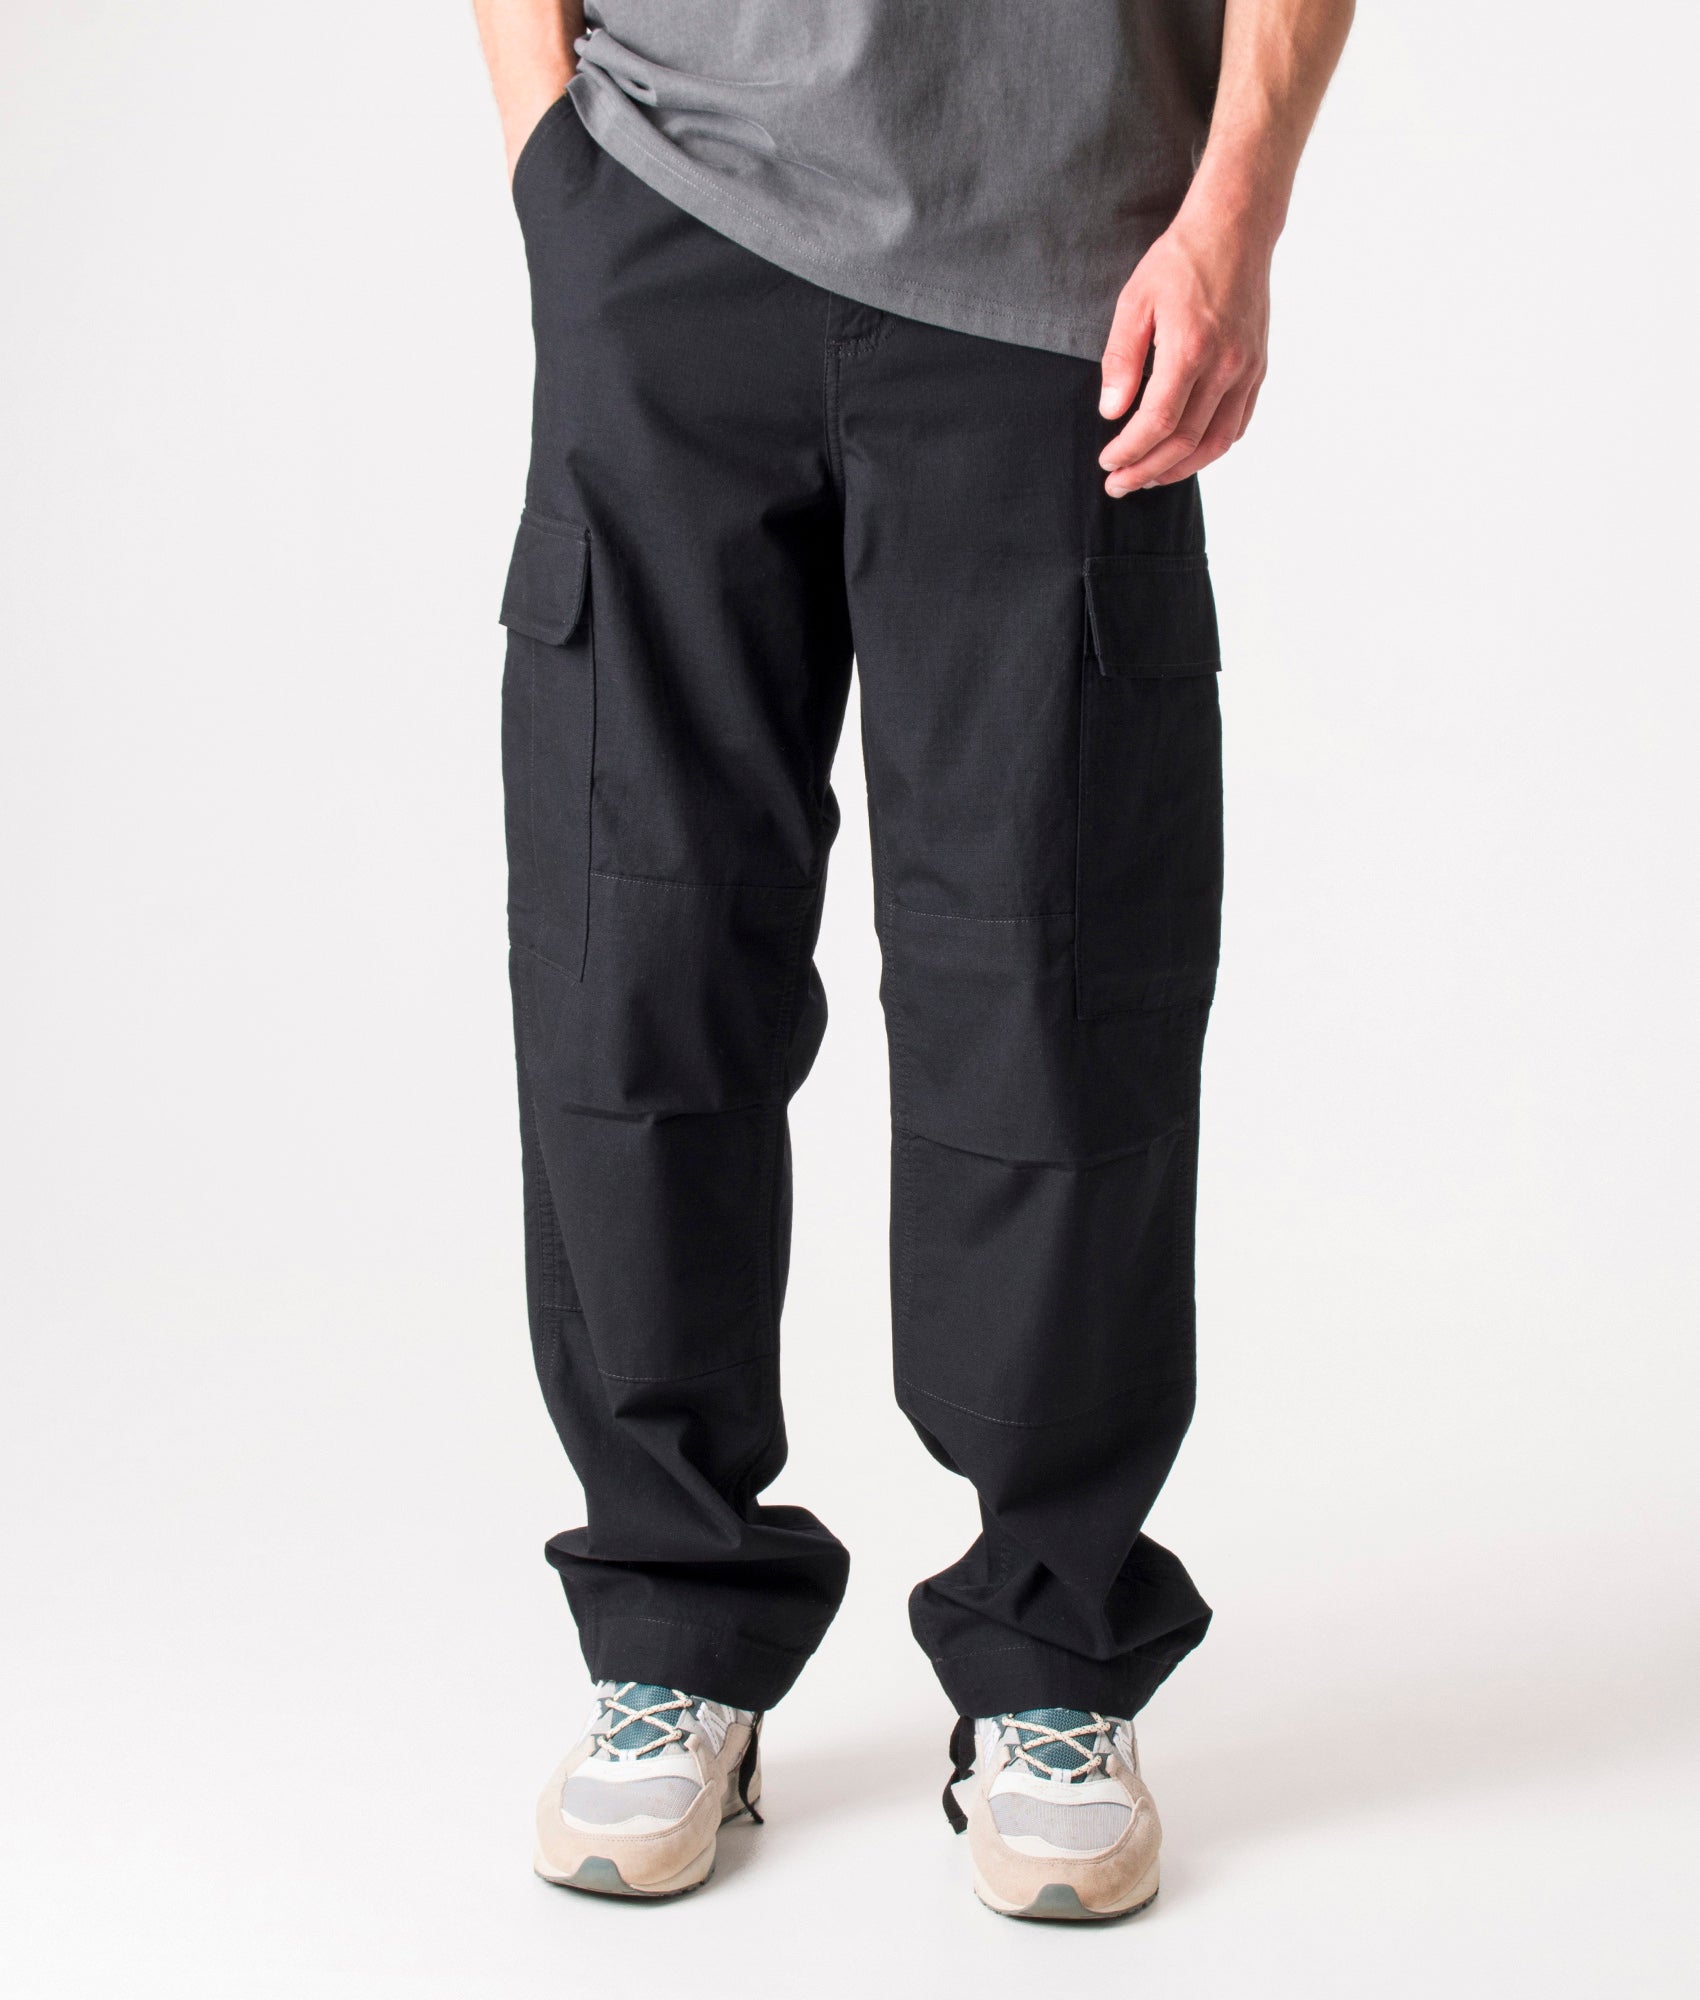 Carhartt WIP Mens Regular Fit Cargo Pants - Colour: 8902 Black - Size: 30R